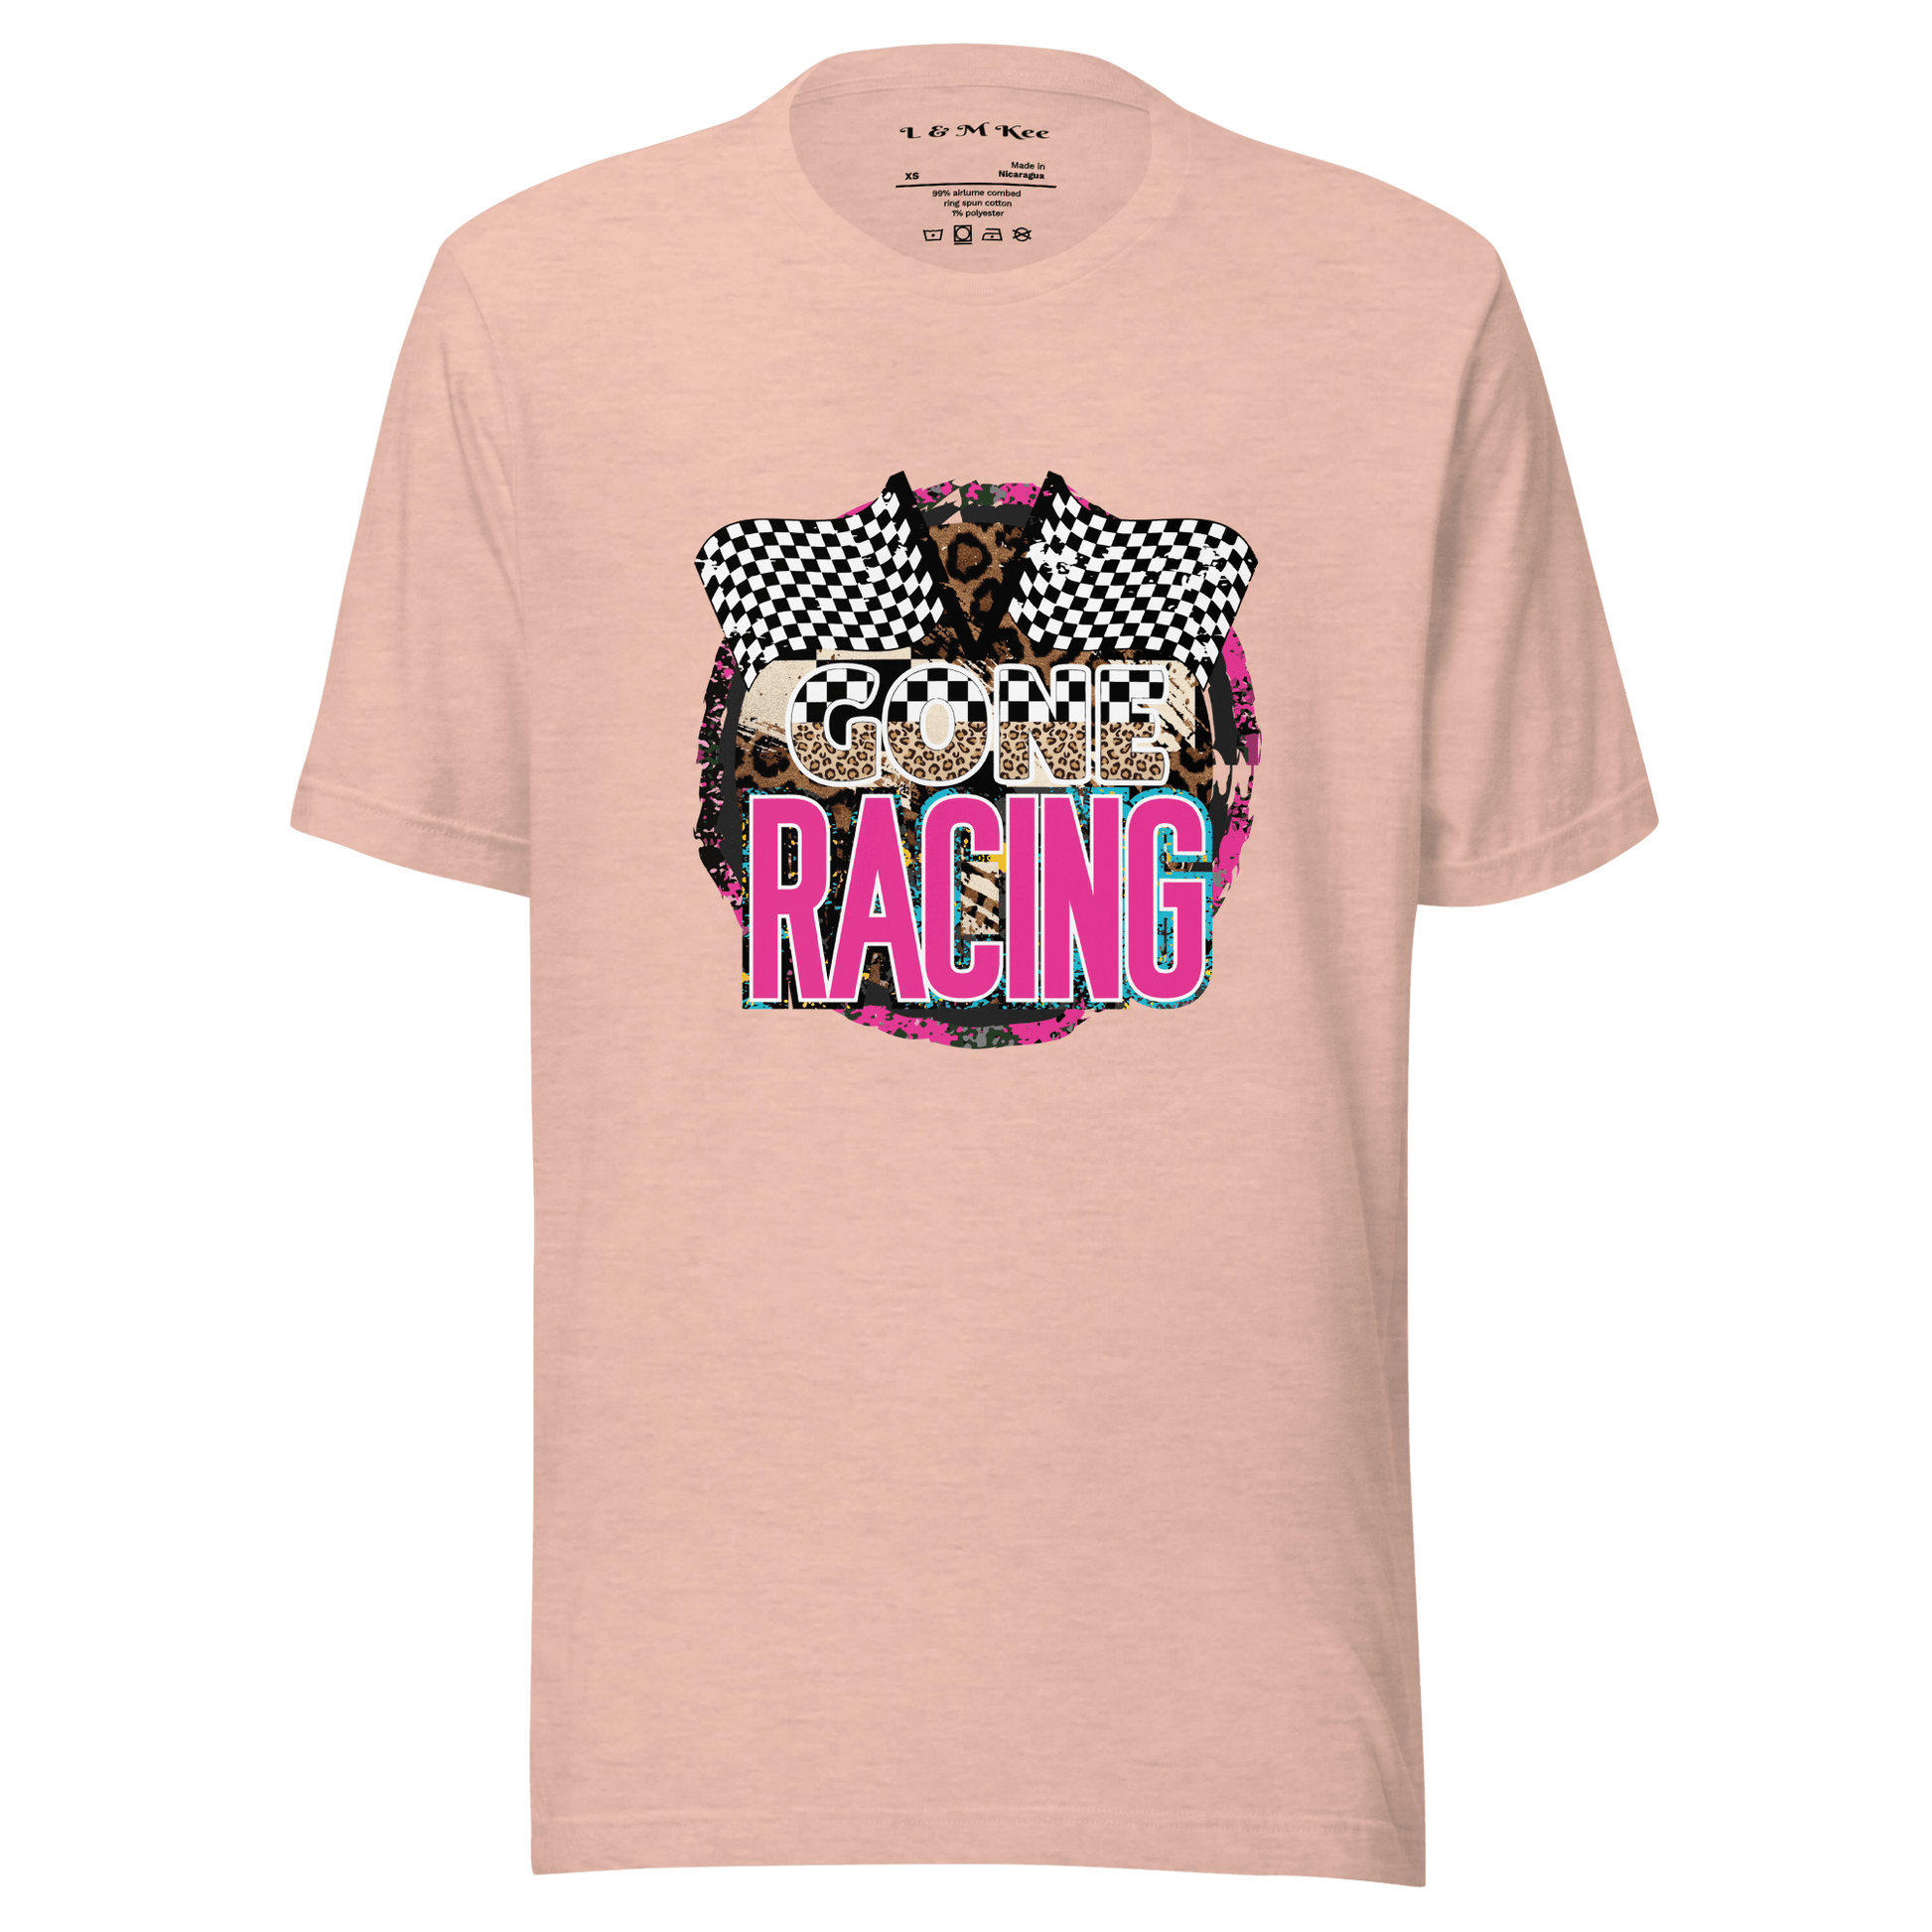 Gone Racing Unisex T-shirt - L & M Kee, LLC